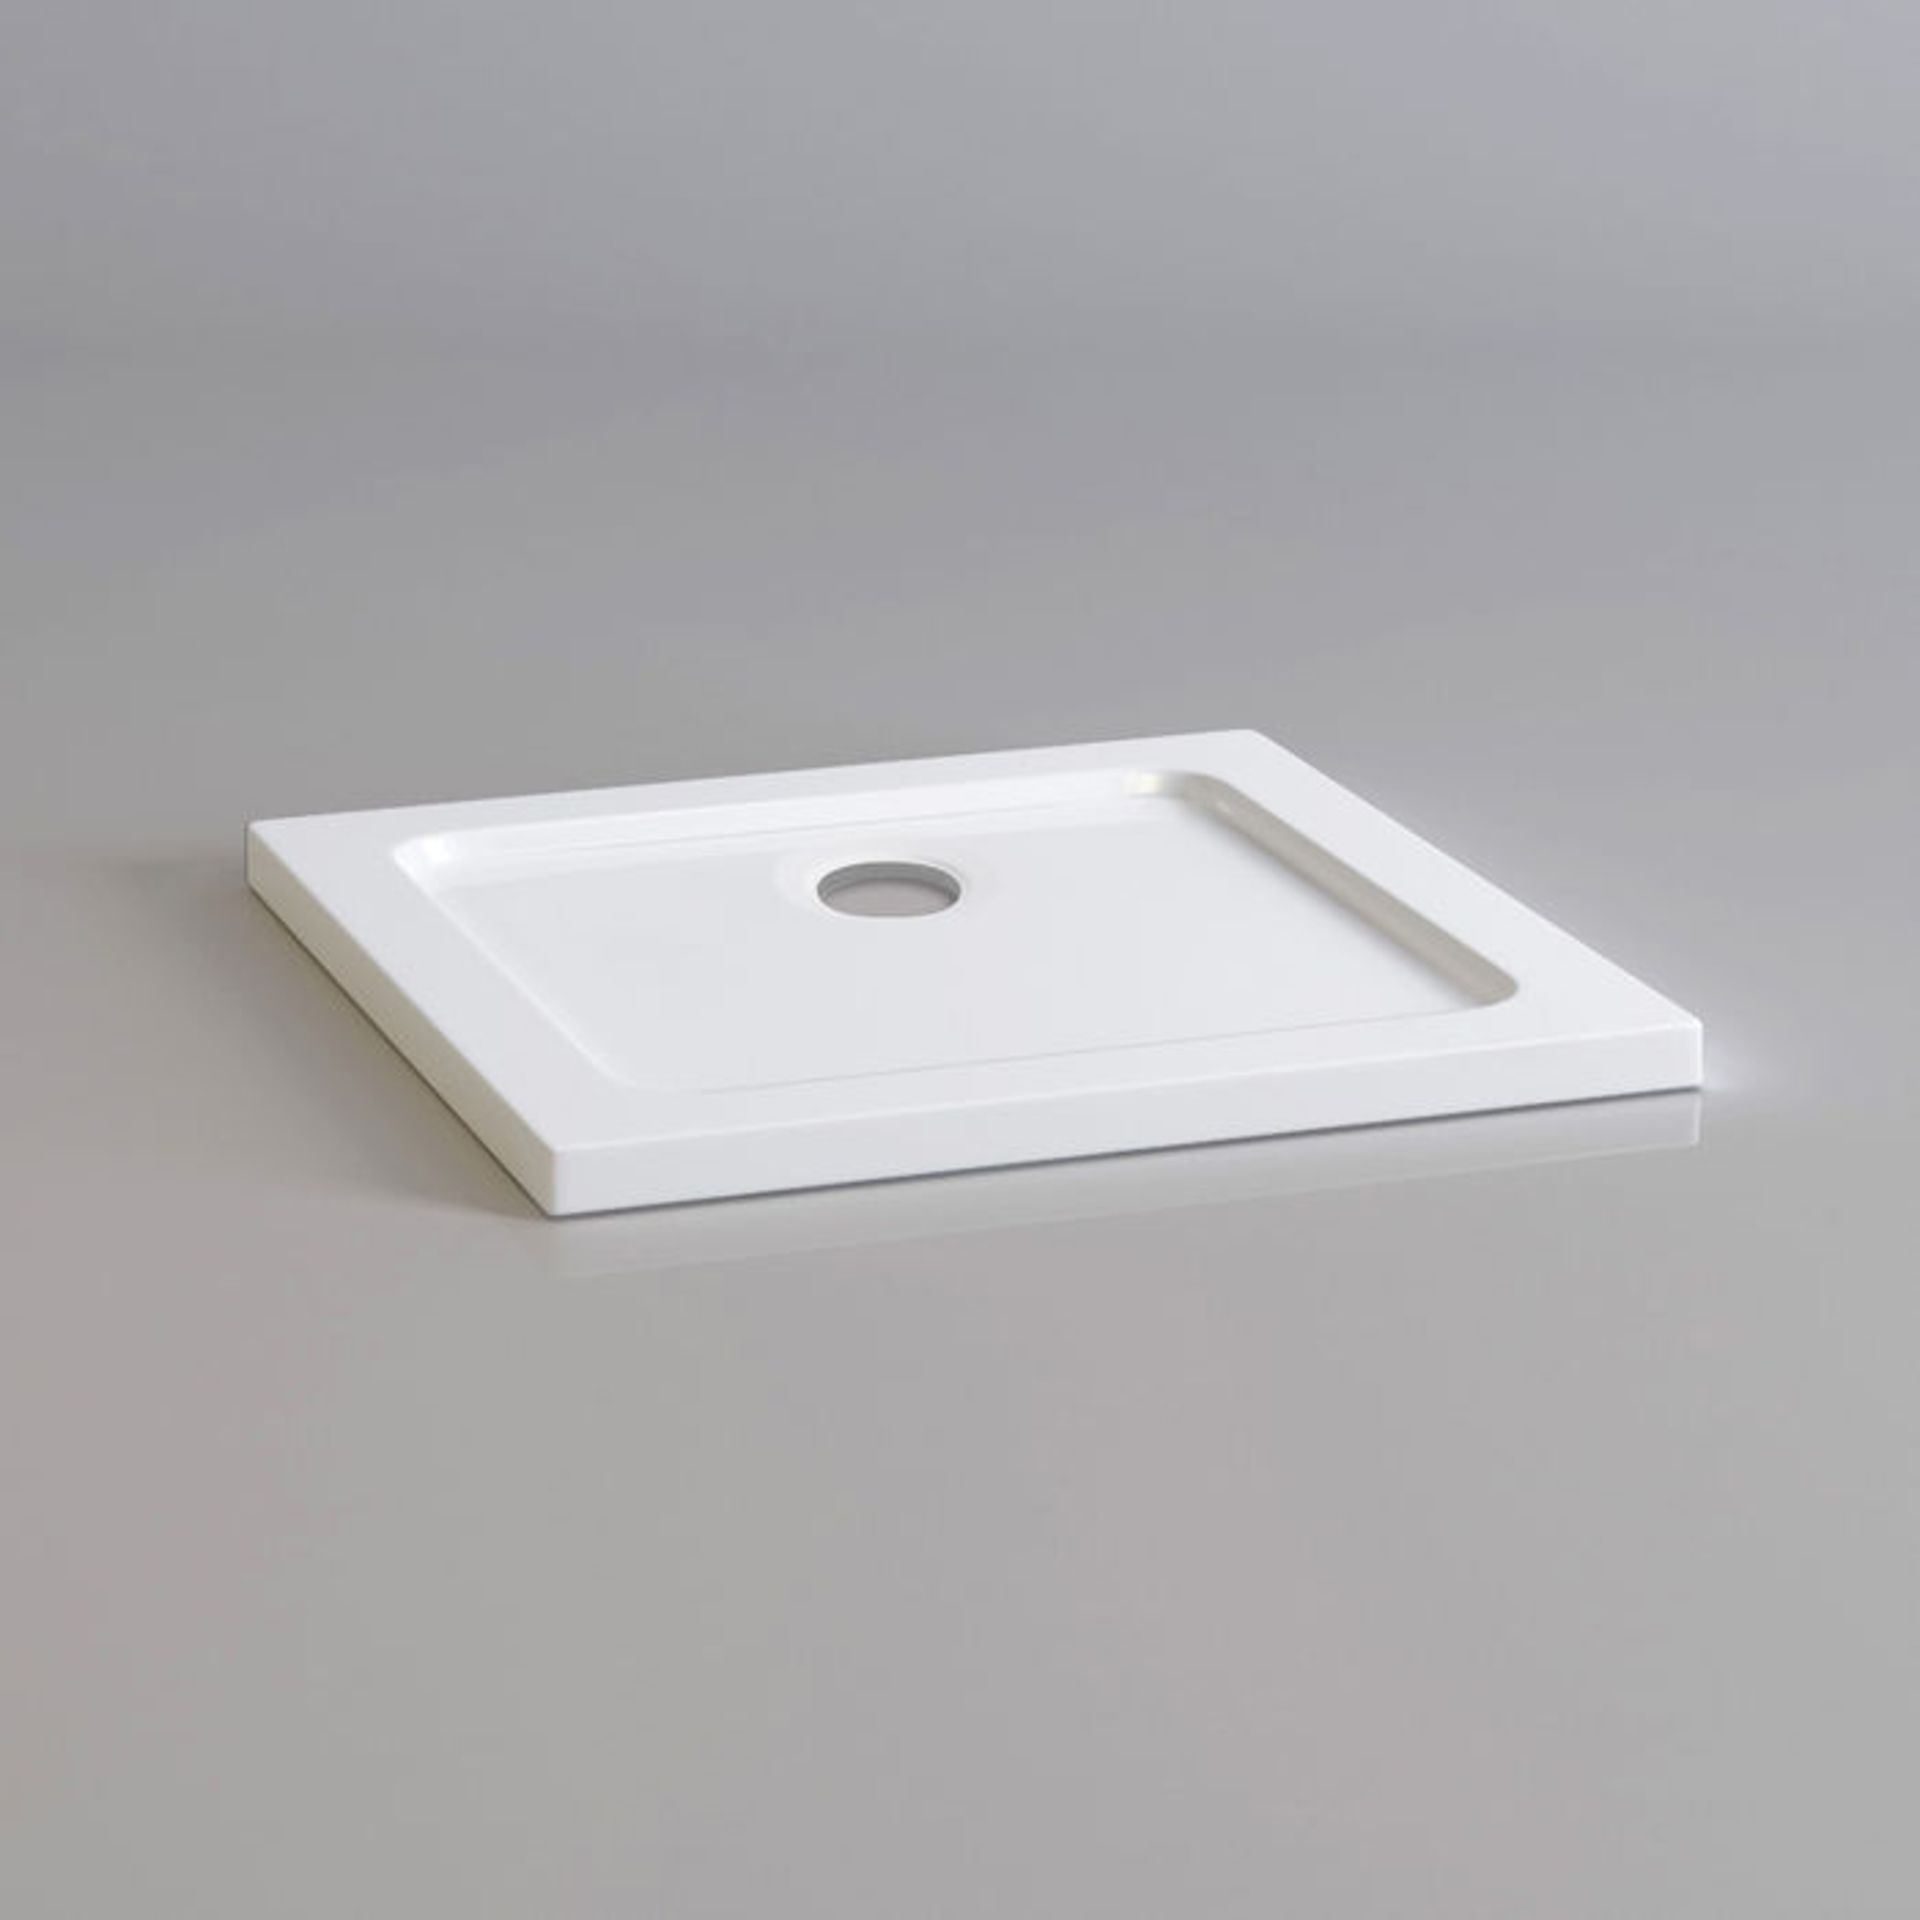 (PA70) 700x700mm Square Ultra Slim Stone Shower Tray. Low profile ultra slim design Gel coated stone